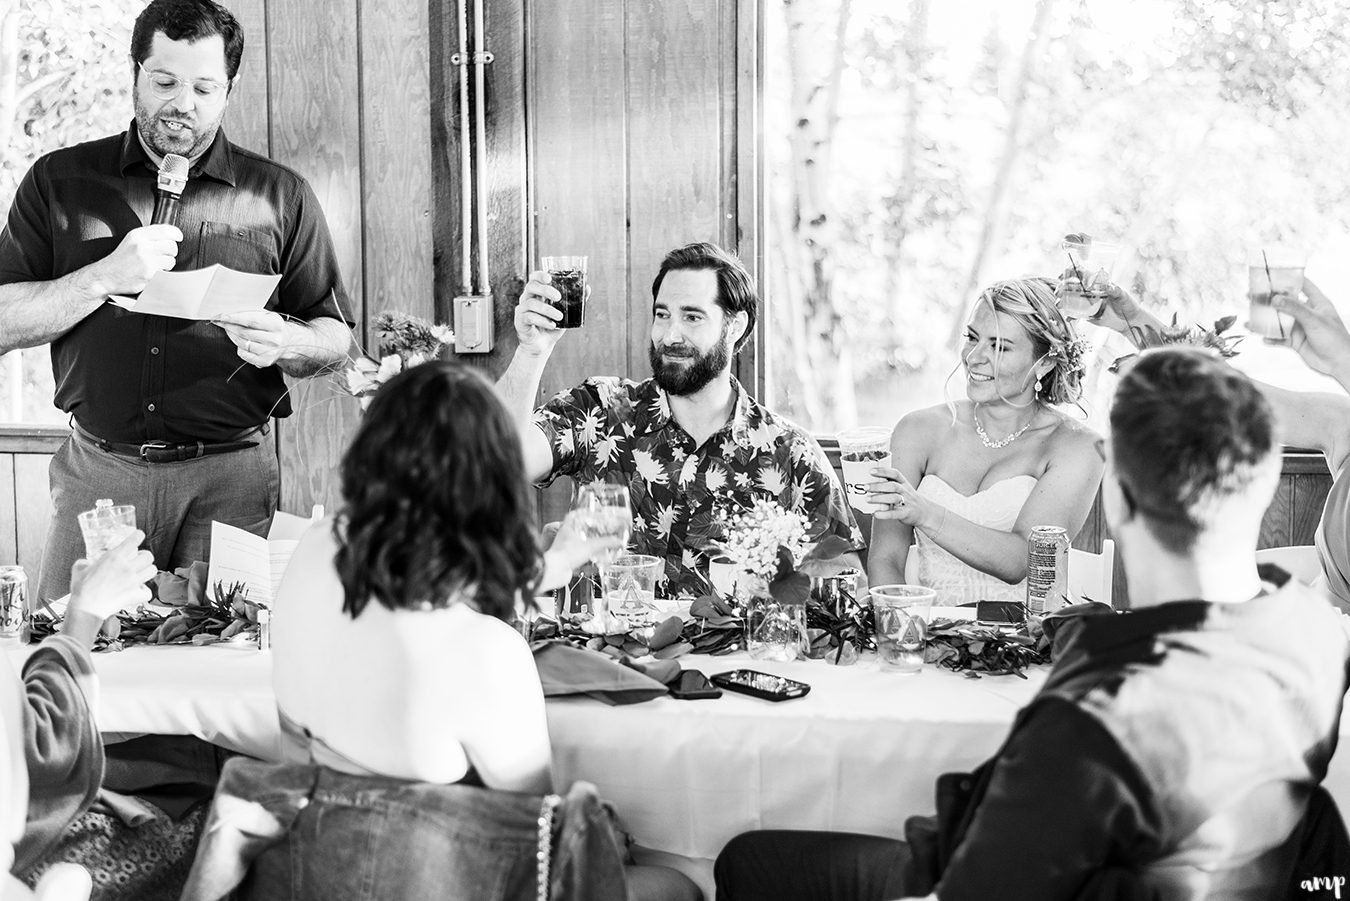 Everyone sharing at toast at the Mountain Wedding Garden